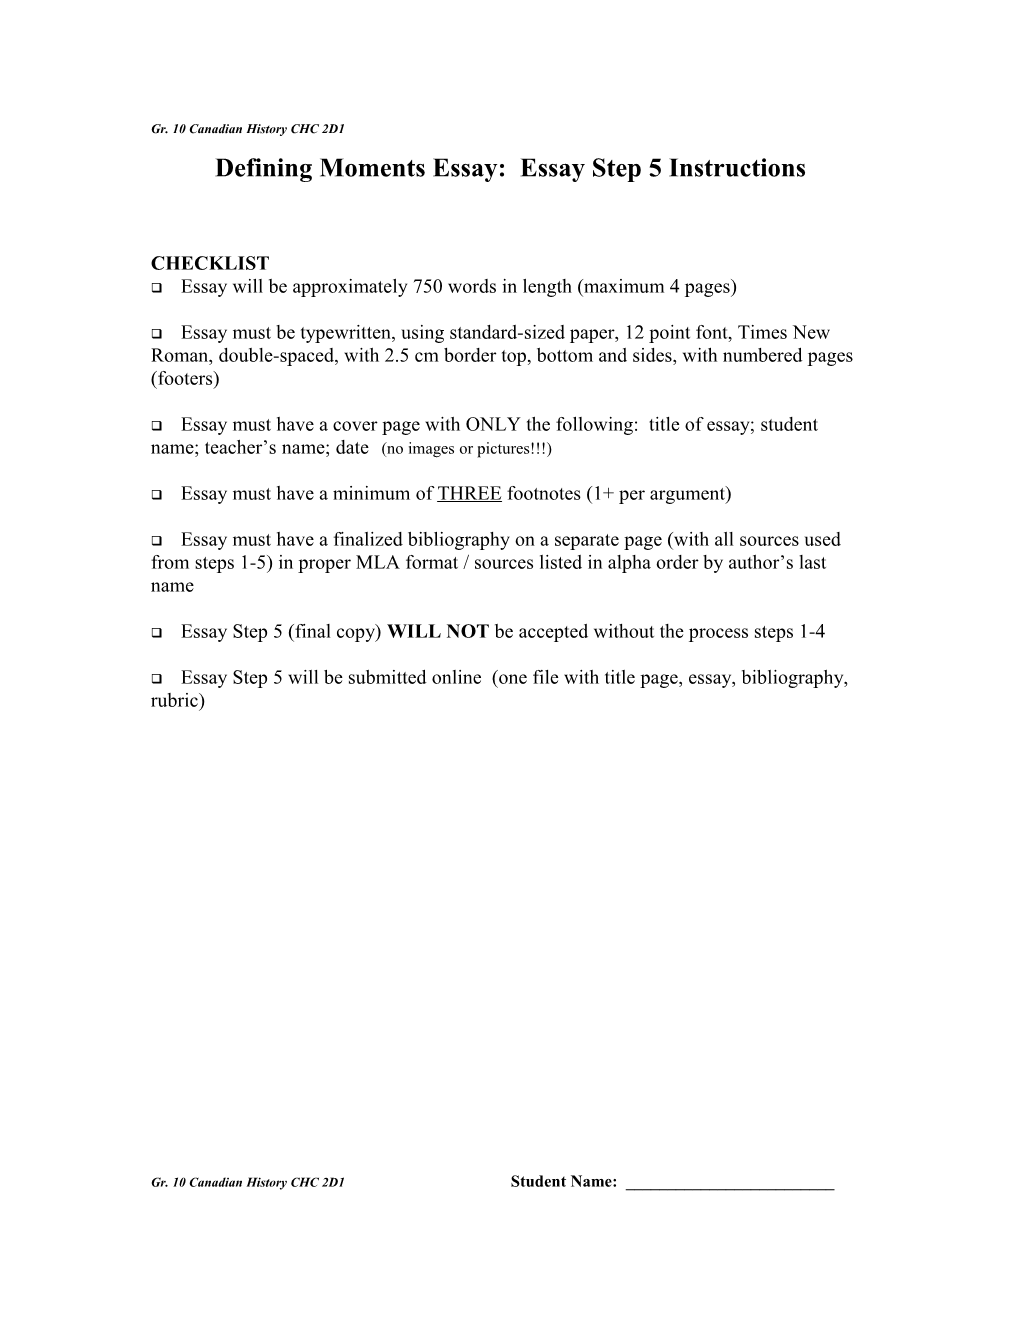 Defining Moments Essay: Essay Step 5 Instructions